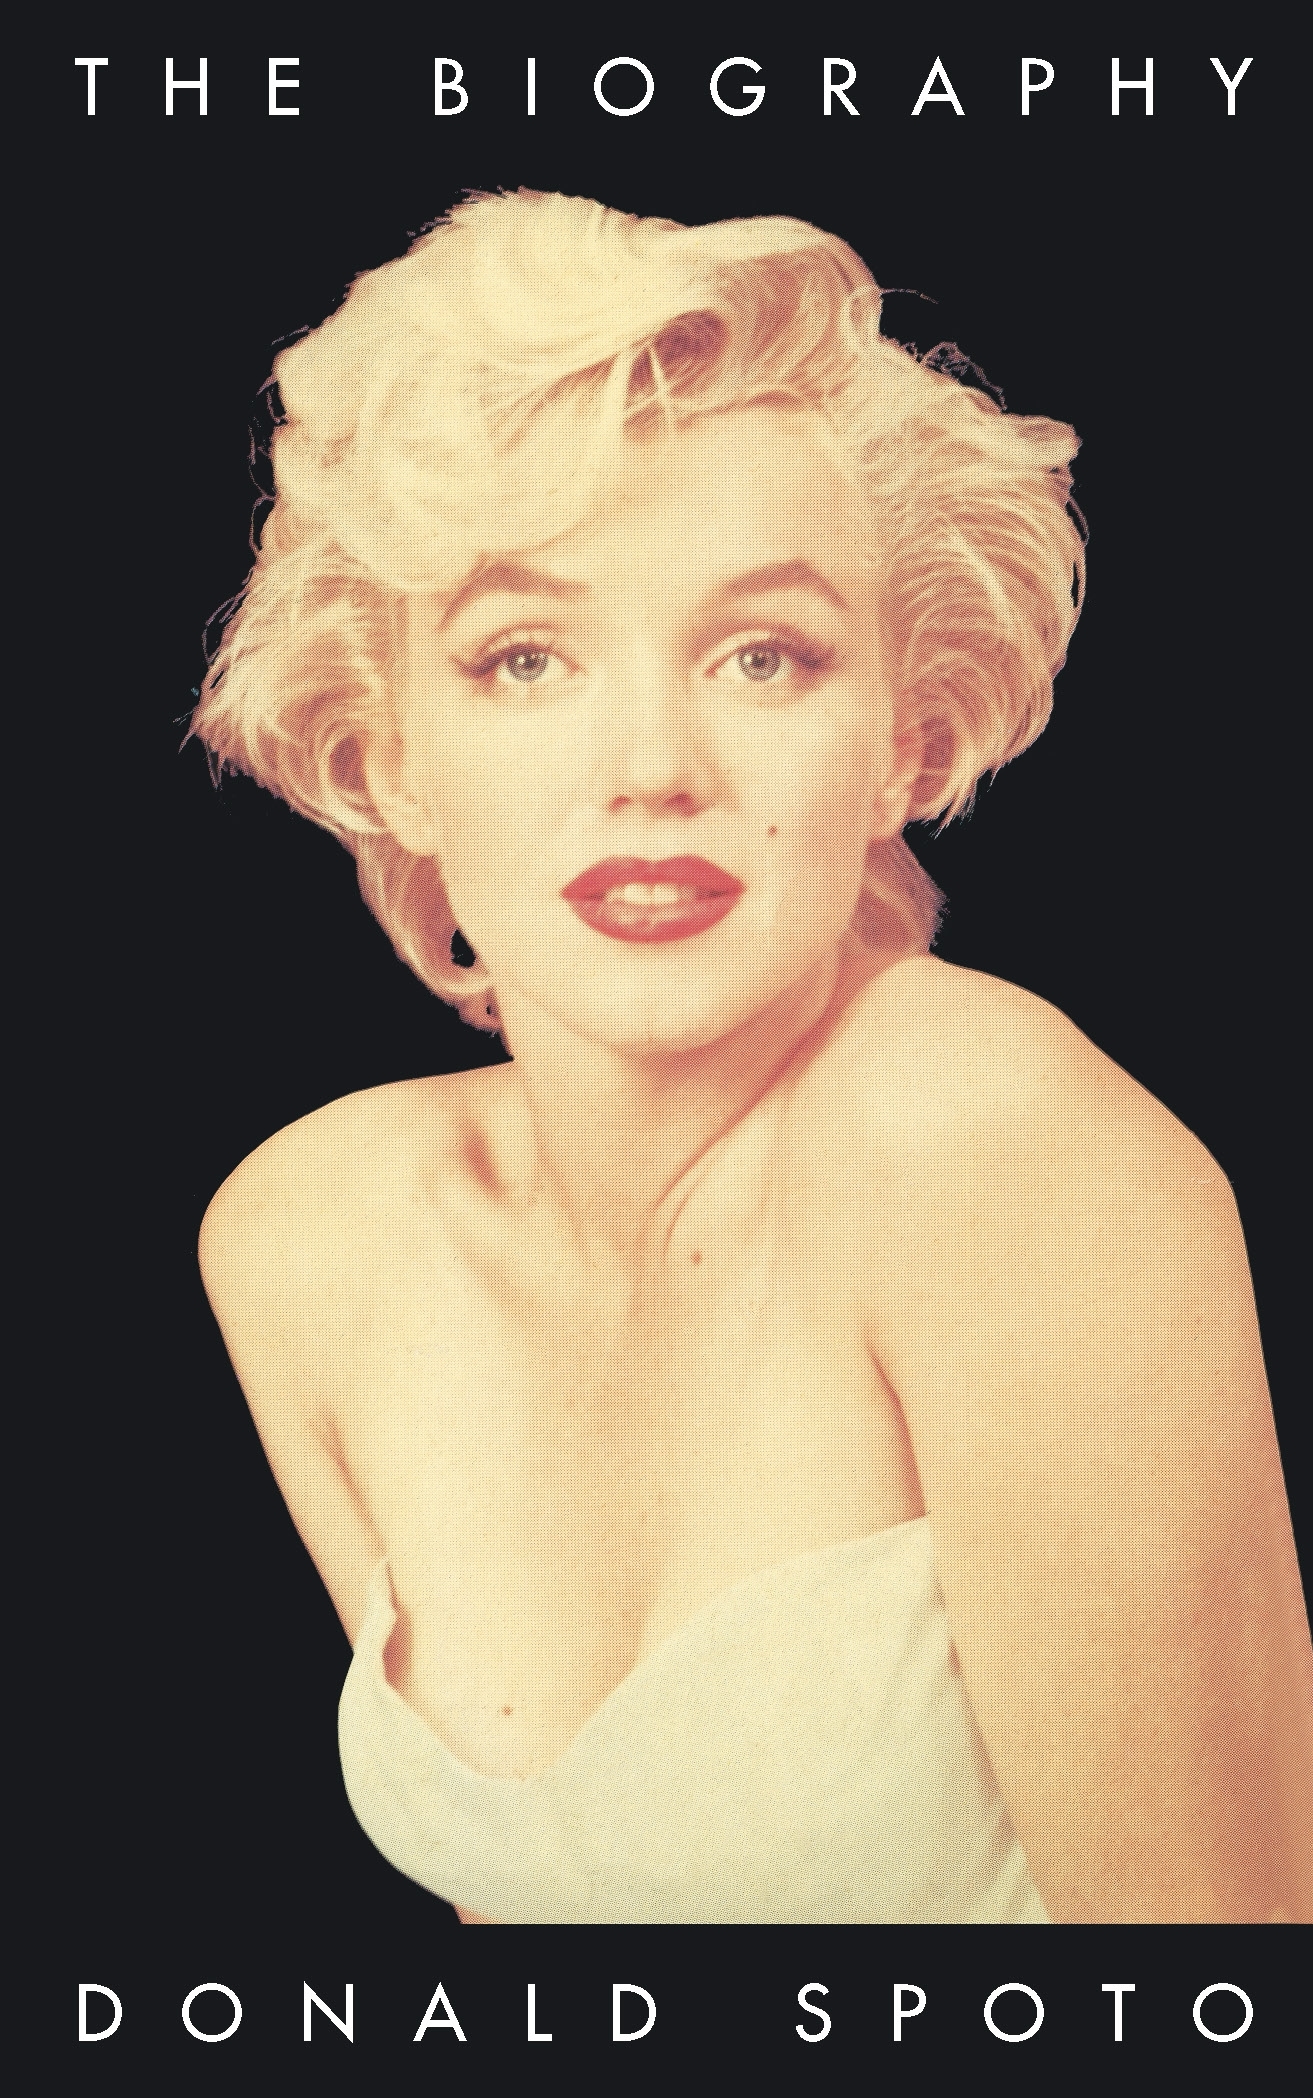 Marilyn Monroe by Donald Spoto - Penguin Books New Zealand